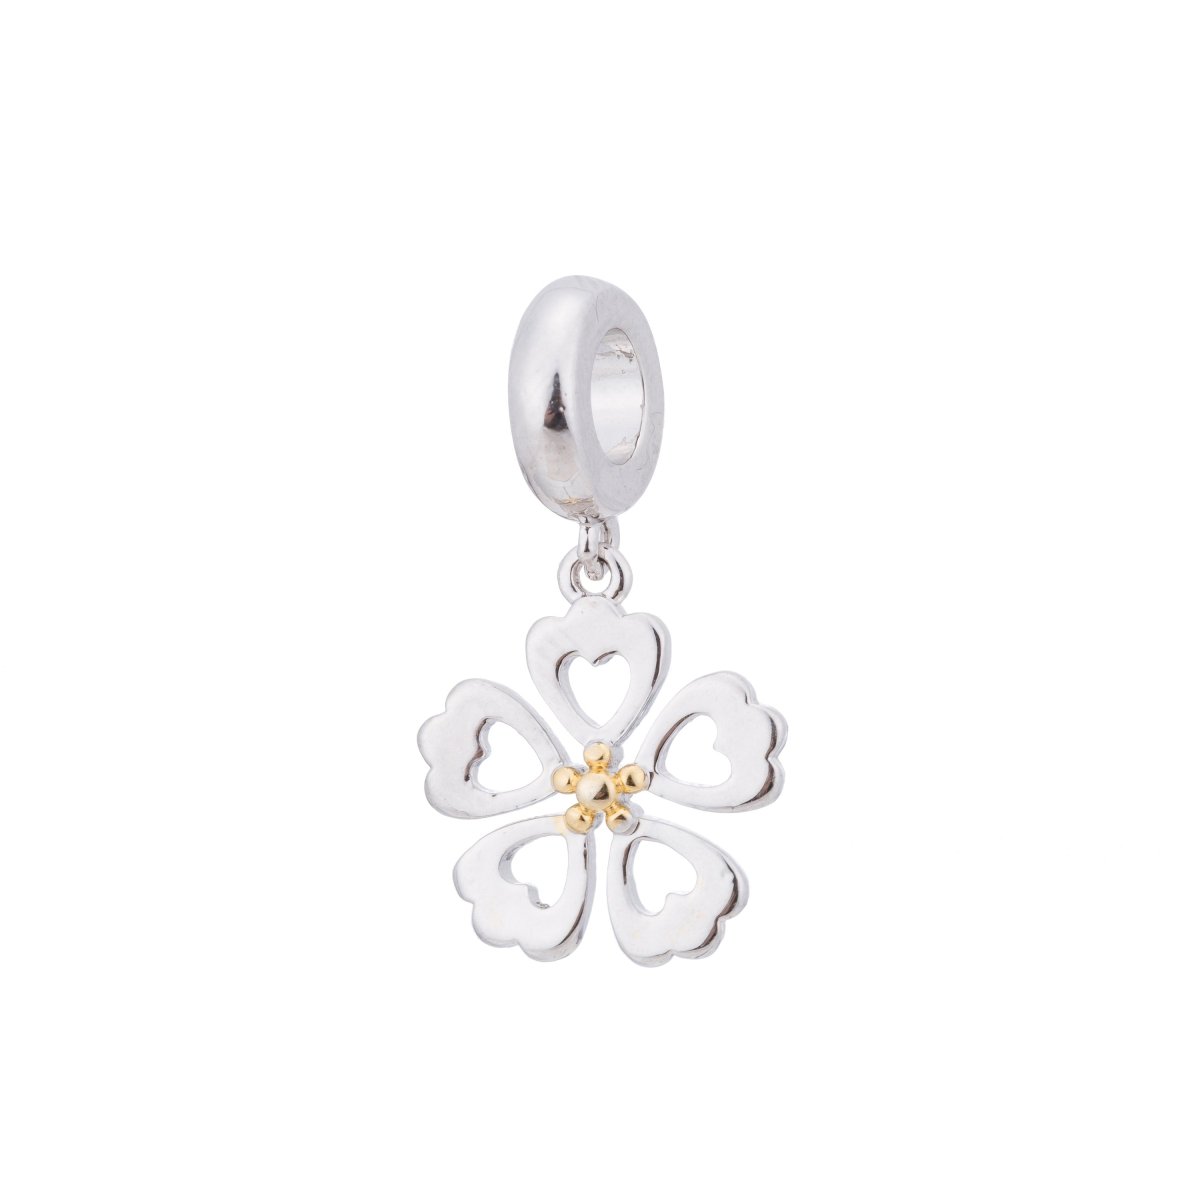 Pandora Silver Cute Flower, Golden Clover, Heart, Love, Wish, Luck, Ladies Gift Bracelet Charm Bead Finding Pendant For Jewelry Making, C-250 - DLUXCA